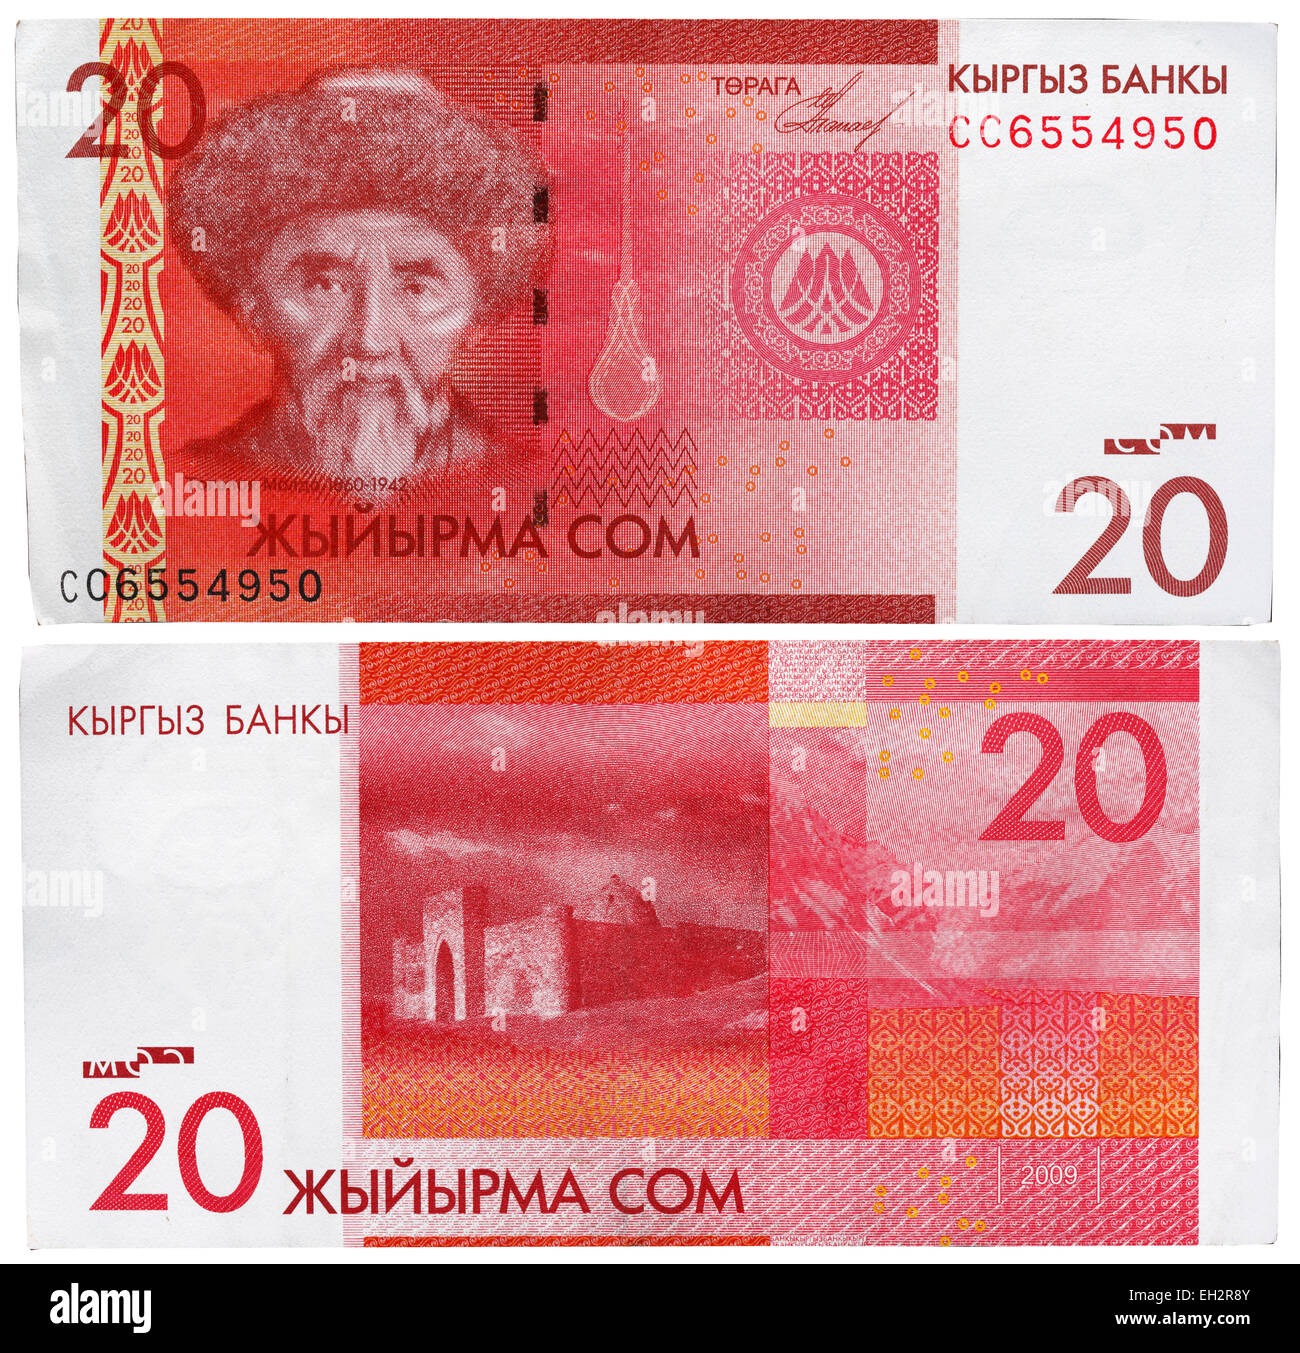 20 som banknote, Togolok Moldo, Tash-Rabat caravansarai, Kyrgyzstan, 2009 Stock Photo